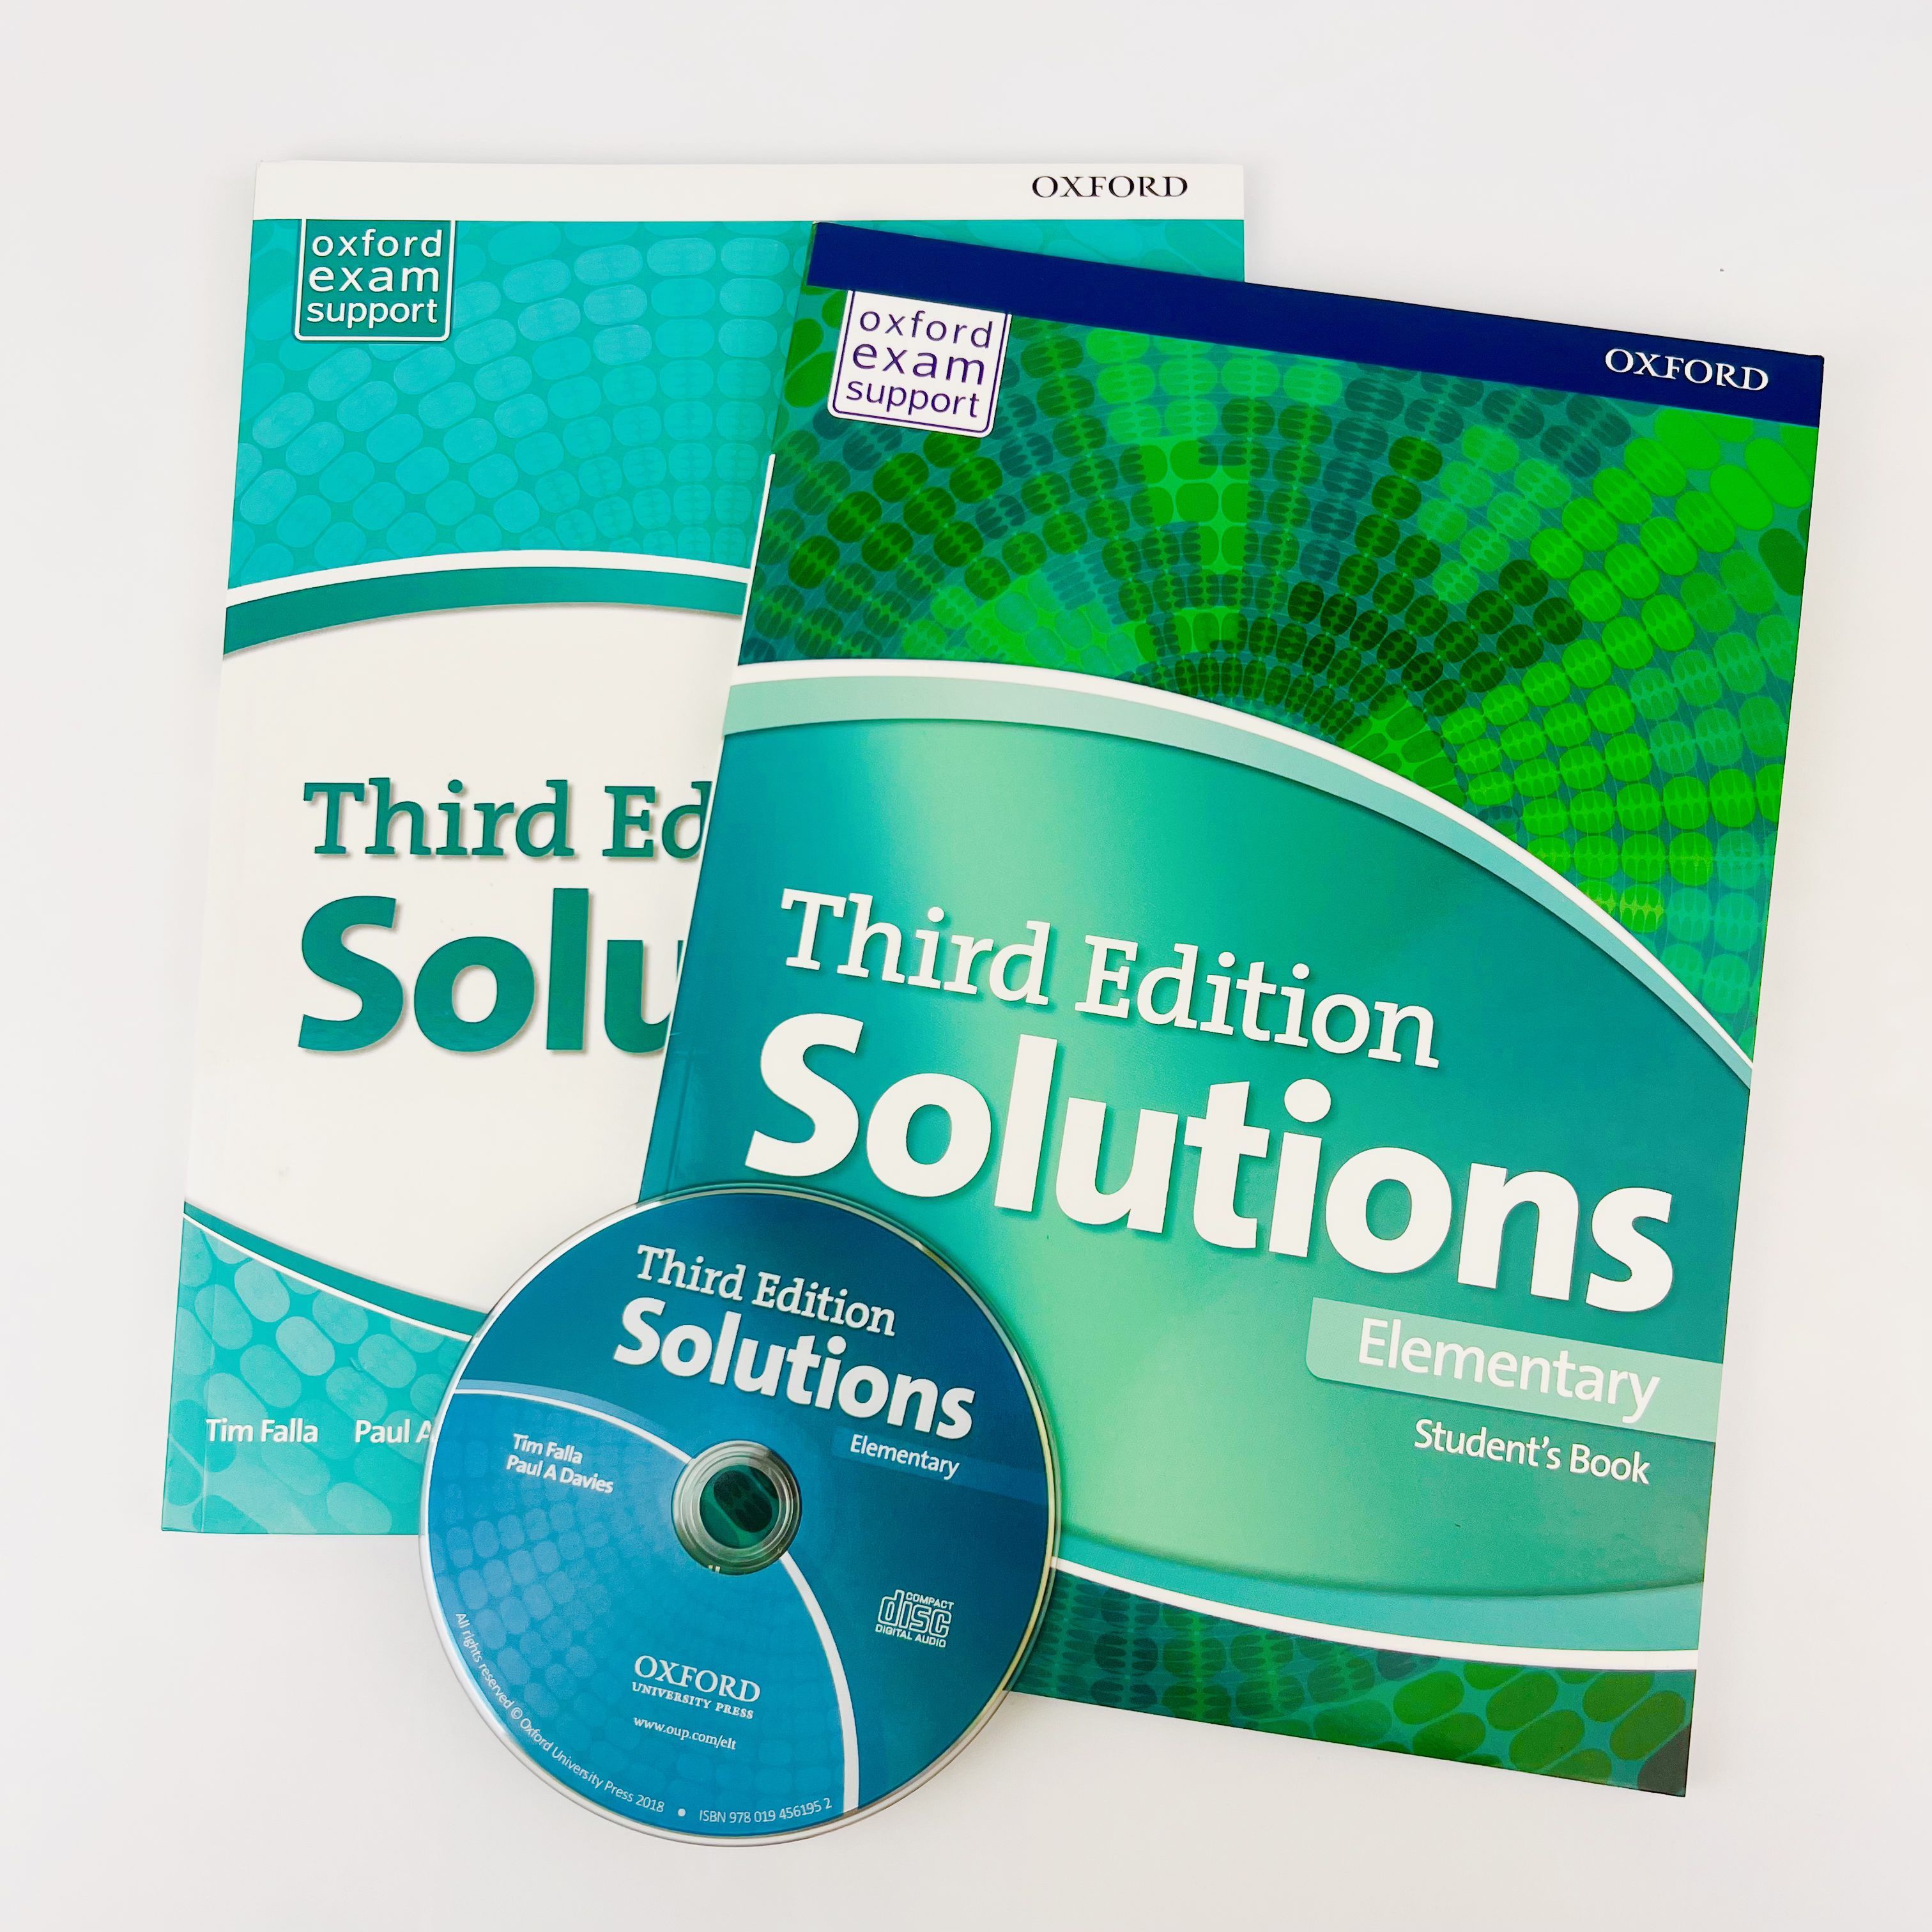 Solutions elementary 6 класс. Солюшнс элементари. Учебник solutions Elementary. Third Edition solutions Elementary. Учебник Солюшенс элементари.